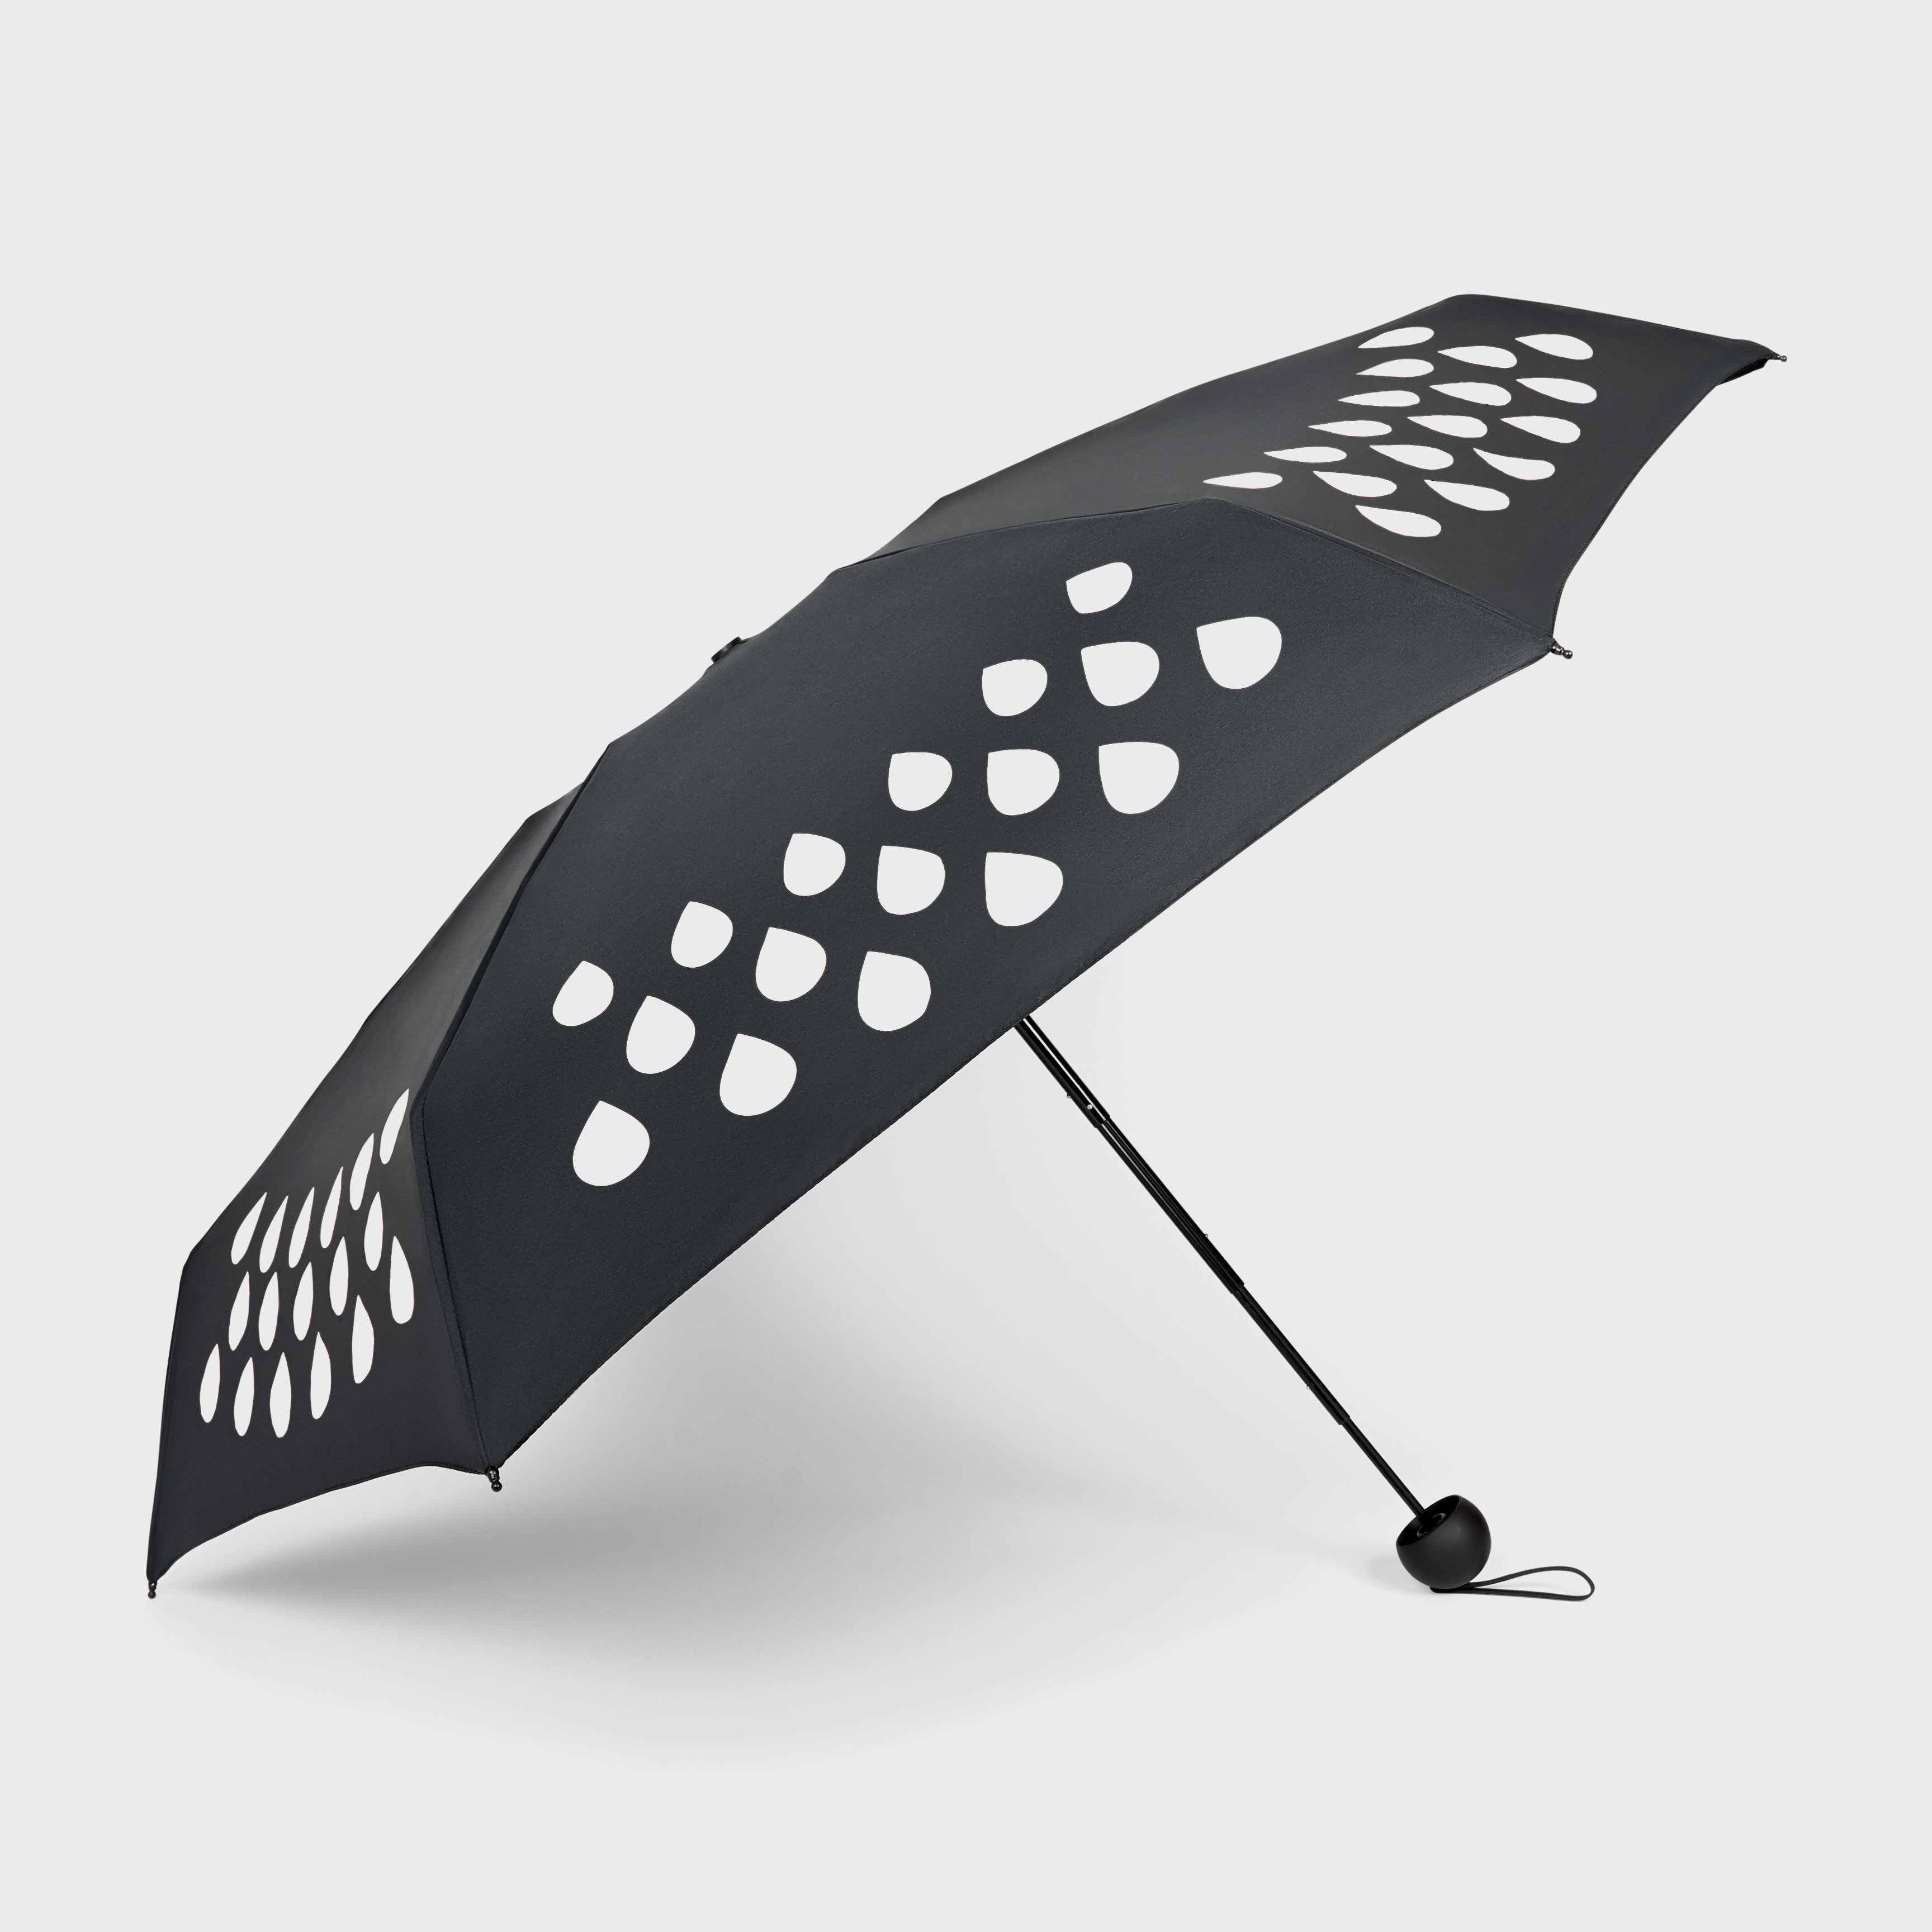 Super Compact Version of Colour Changing Umbrella